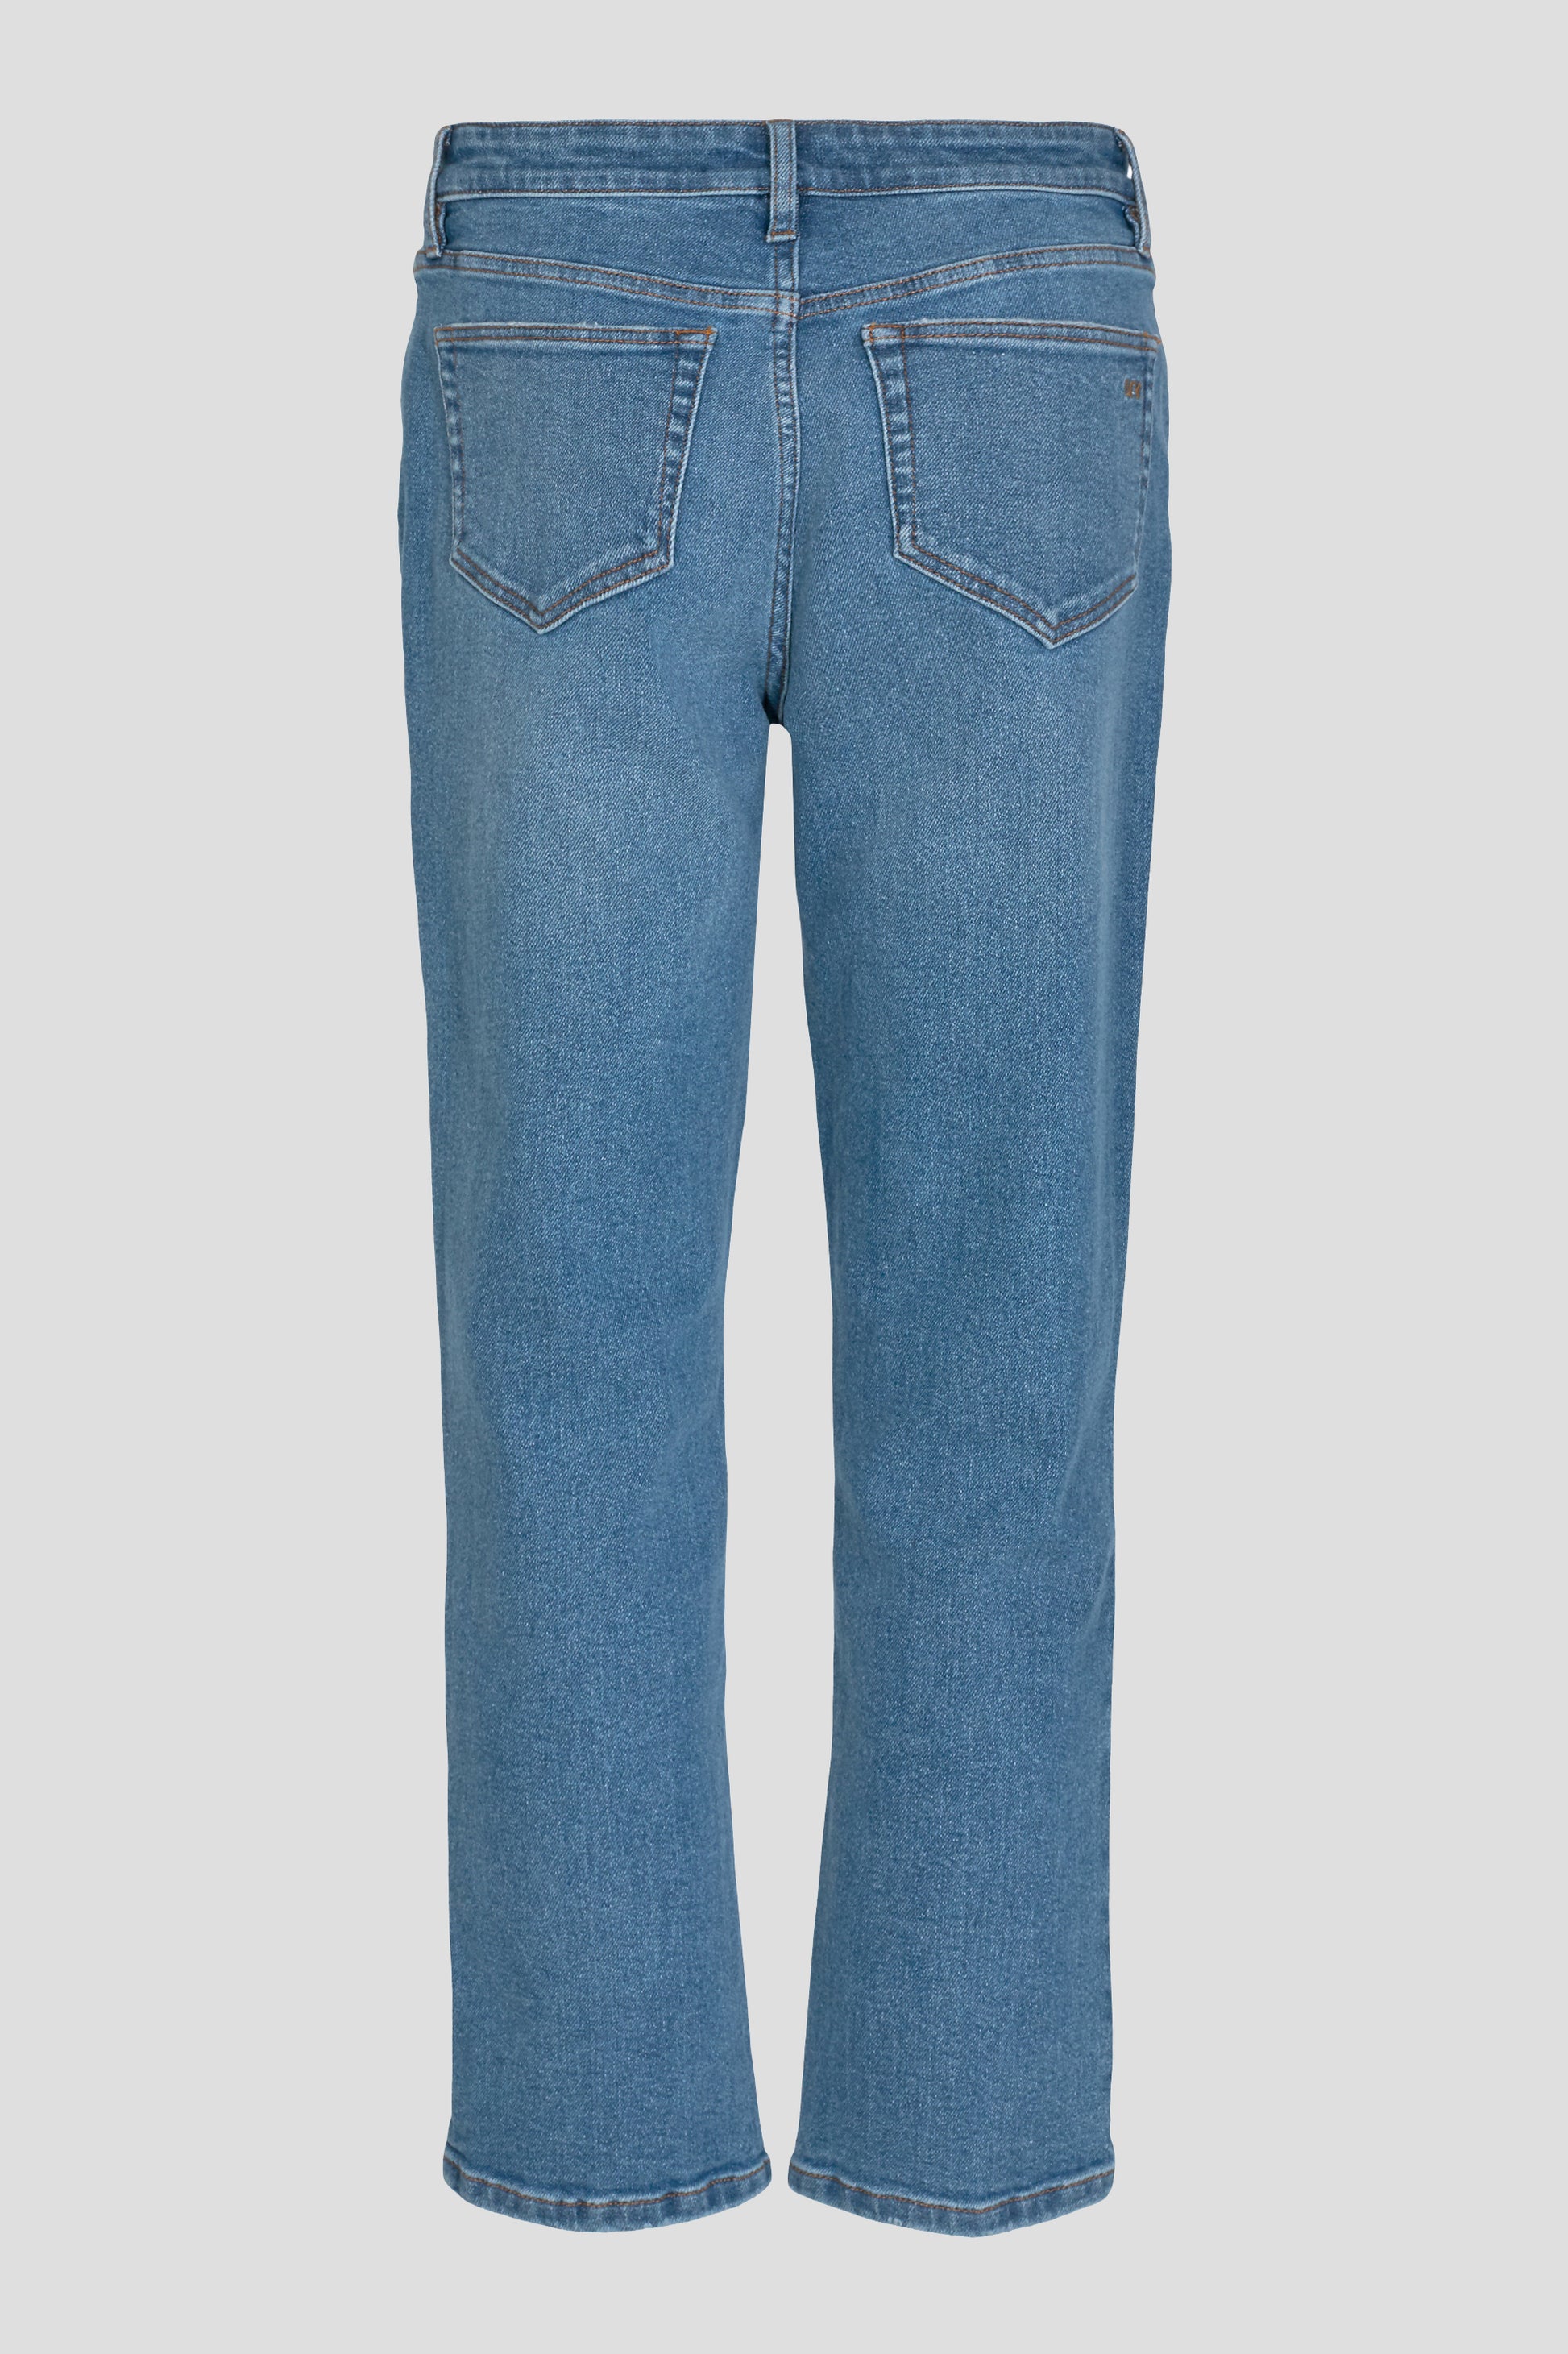 IVY Copenhagen IVY-Tonya Jeans Wash Original Real Denim Jeans & Pants 51 Denim Blue